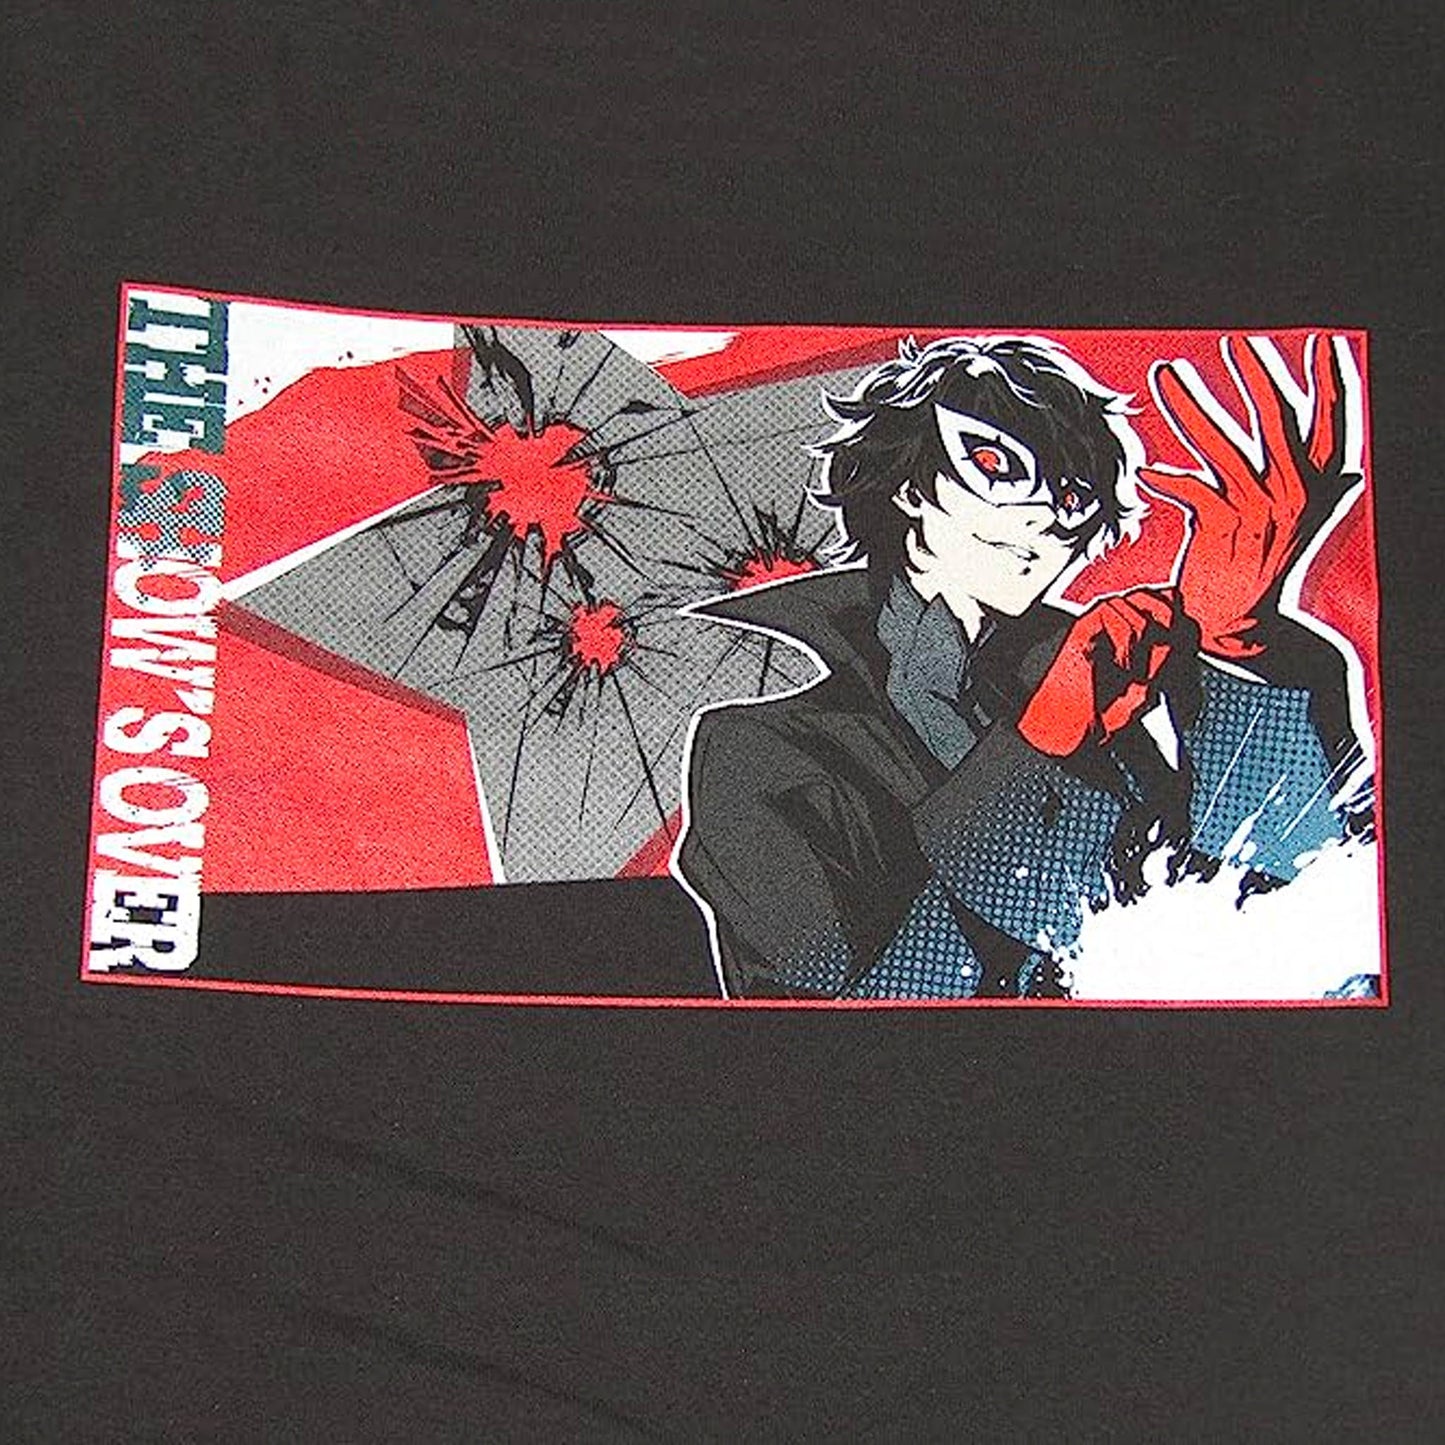 Joker (Persona 5) Unisex Tee Shirt